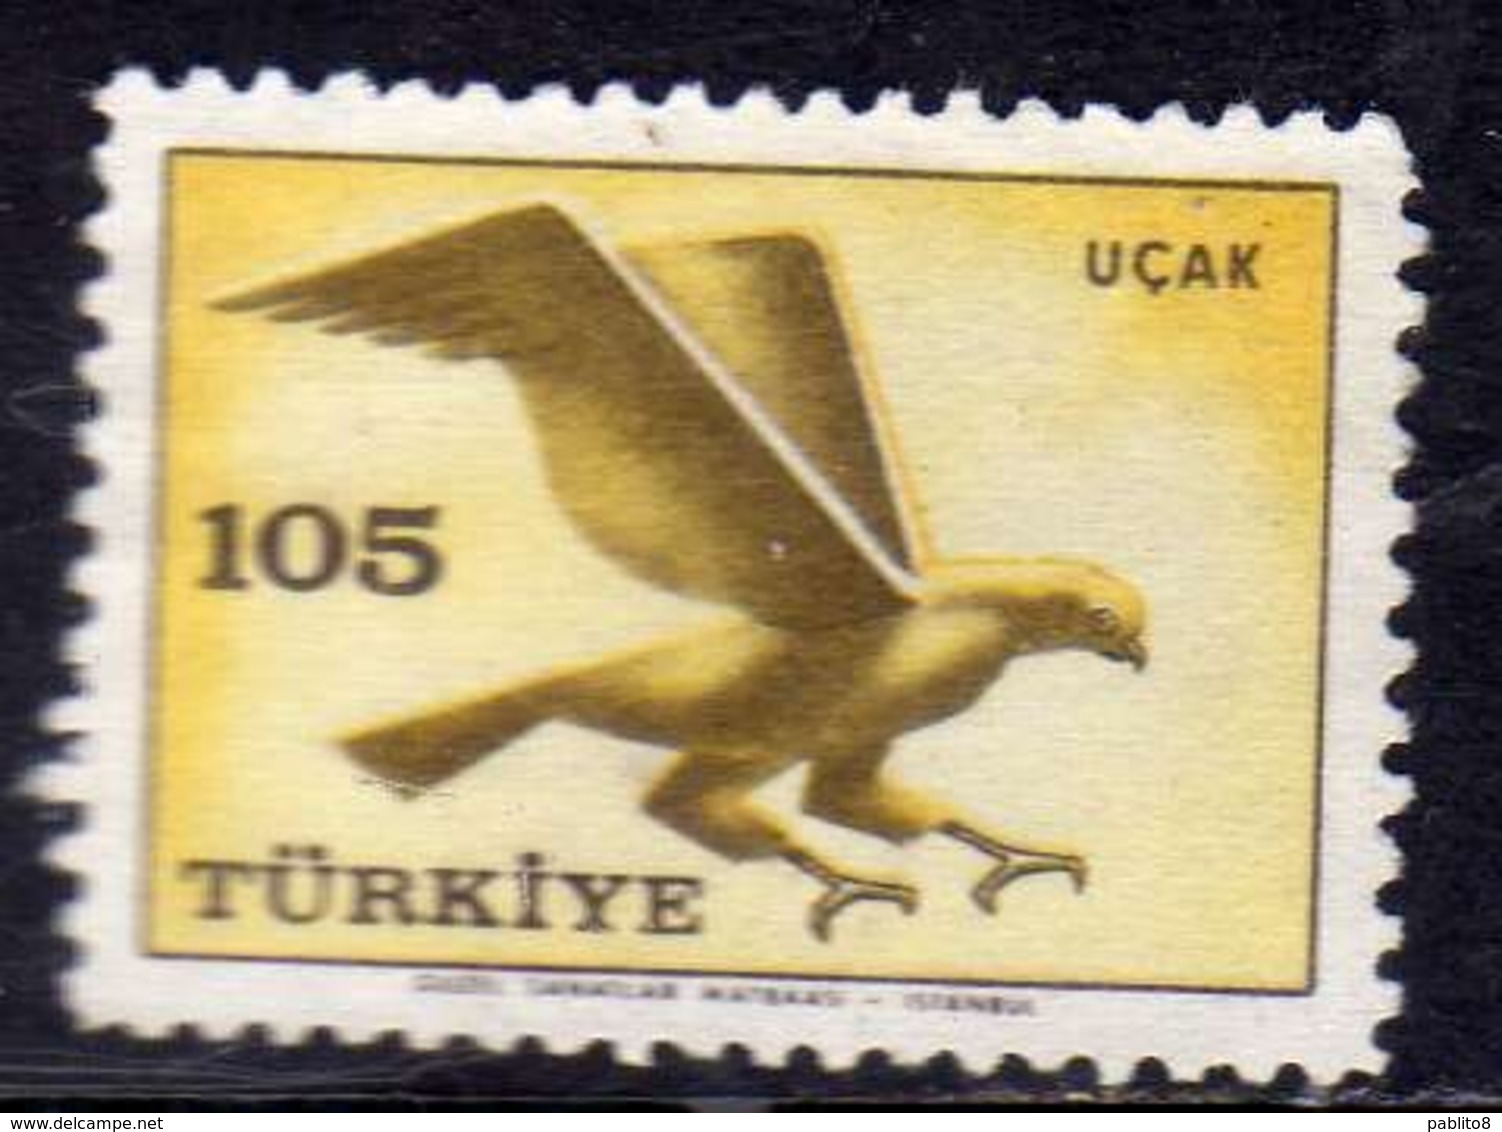 TURCHIA TURKÍA TURKEY 1959 AIR MAIL POSTA AEREA BIRD FAUNA AVICOLA HAWK FALCO 105k MNH - Posta Aerea